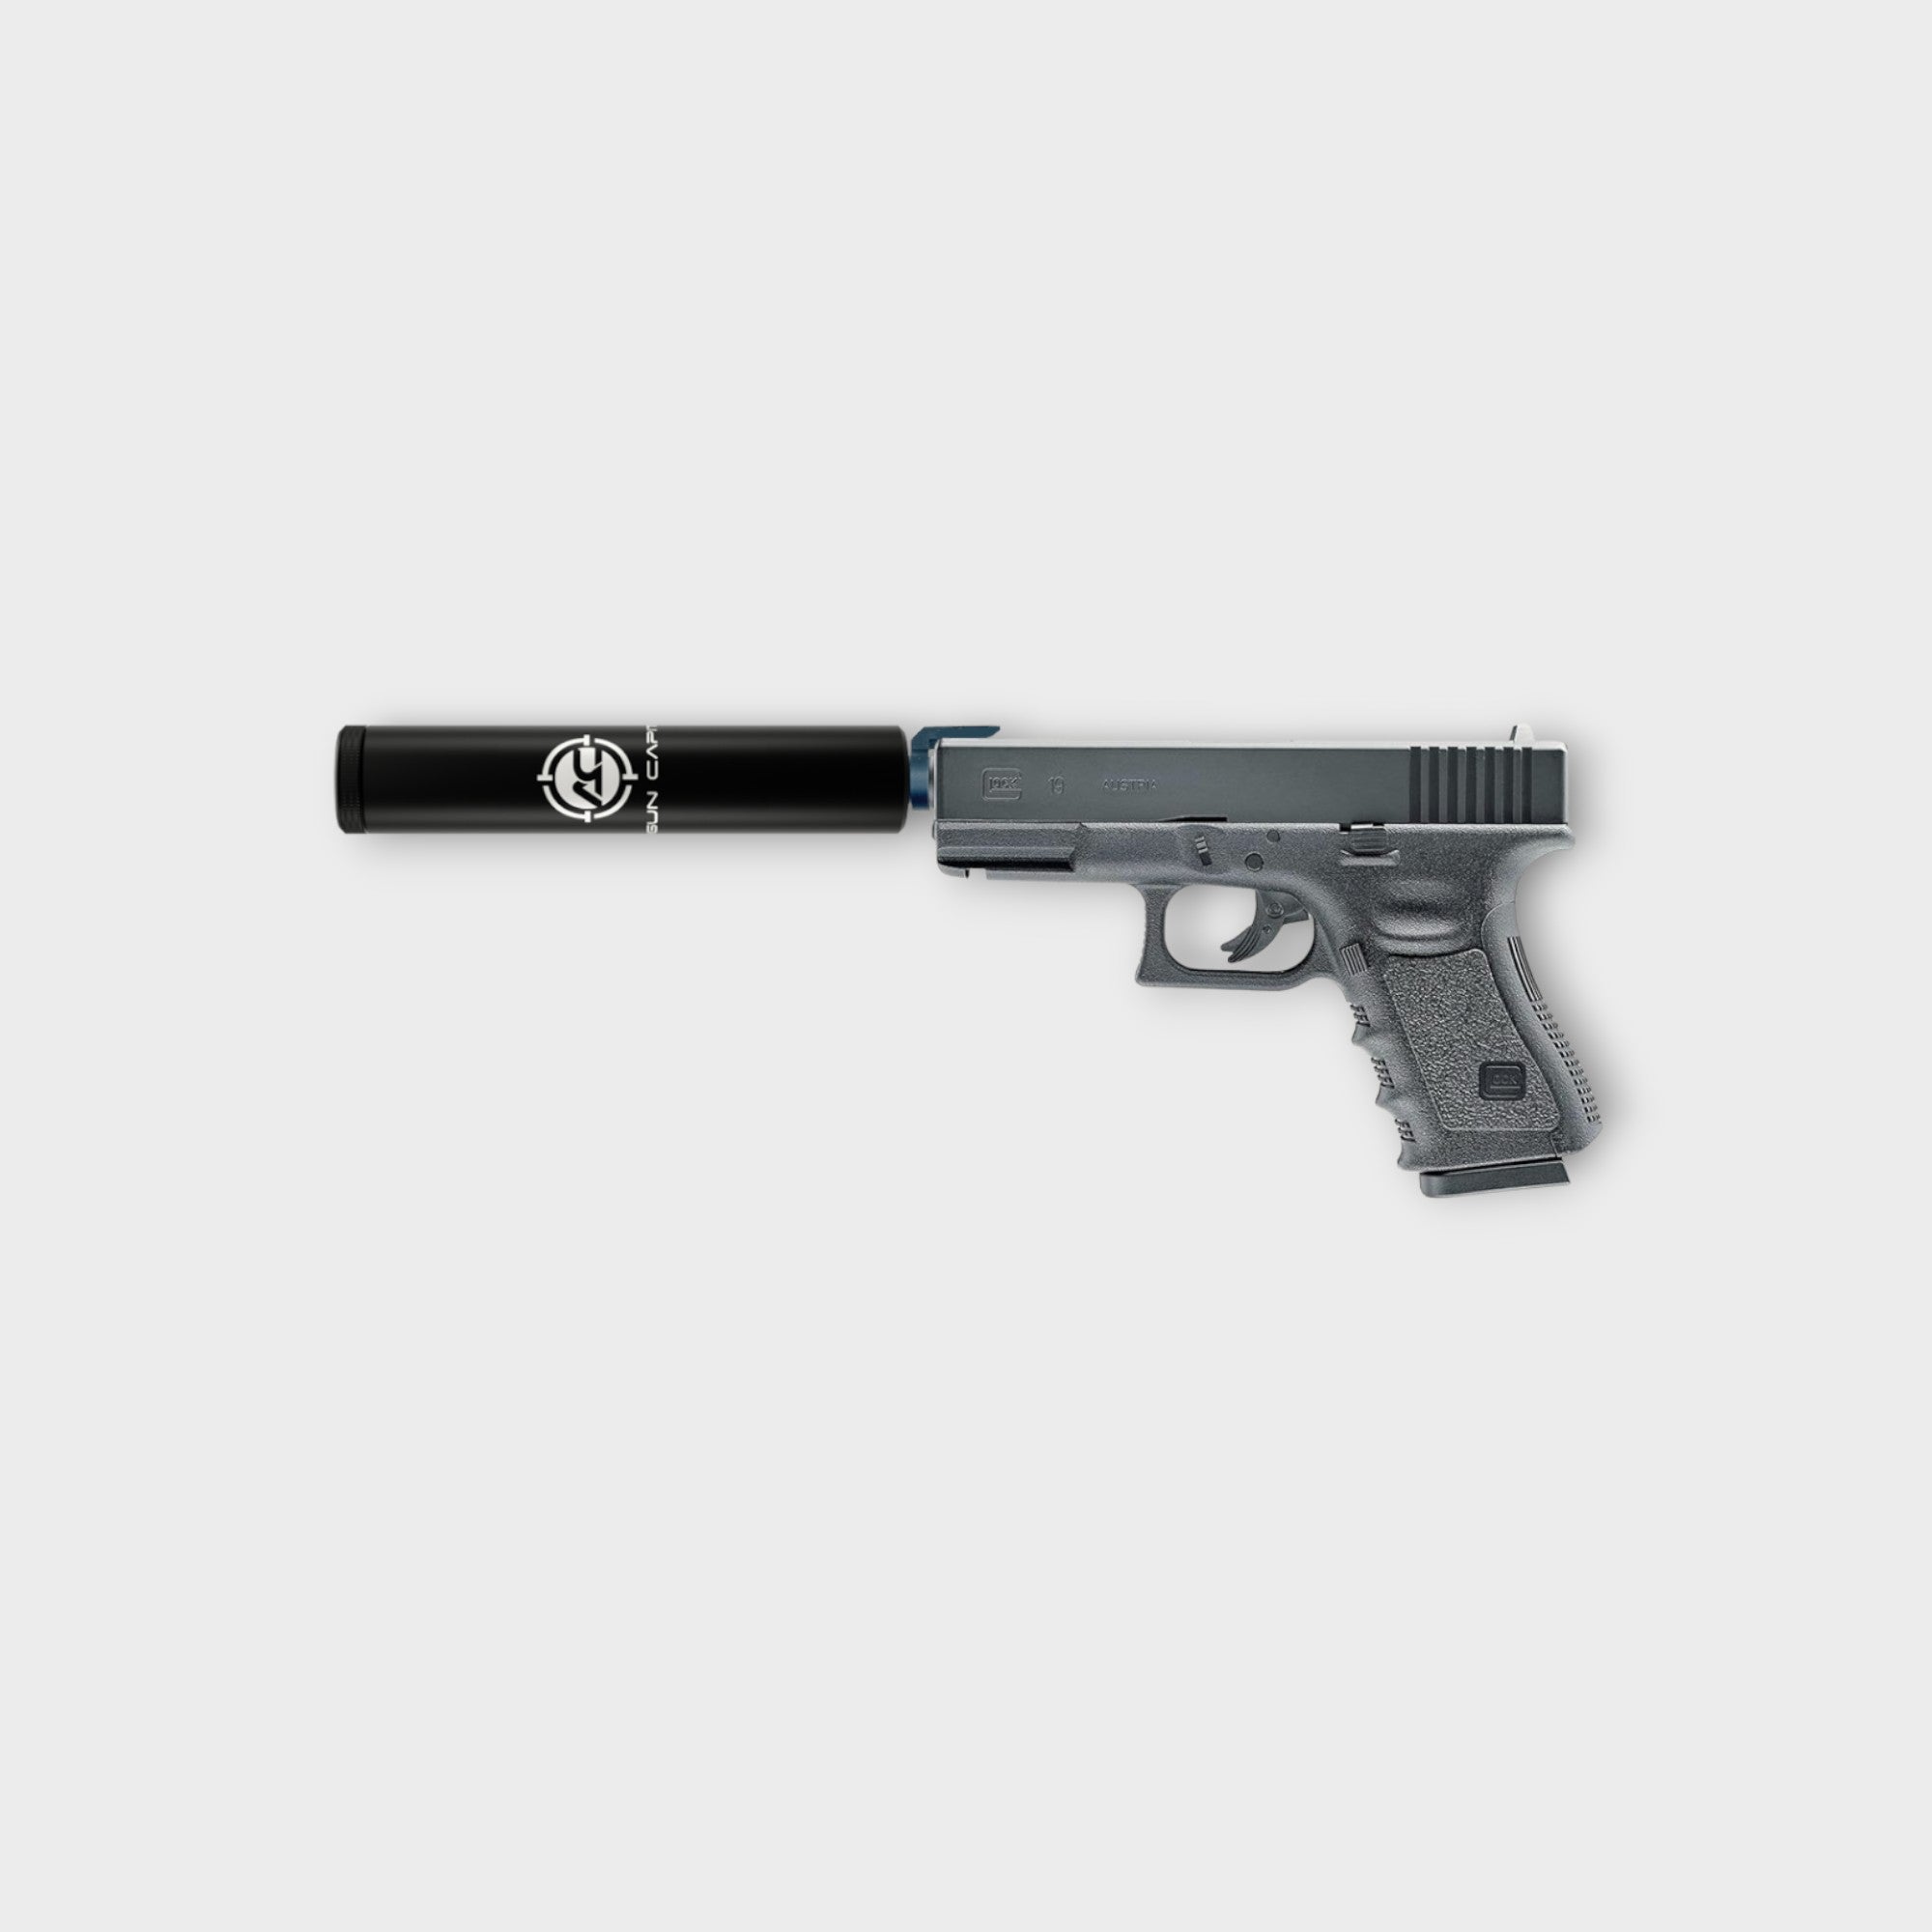 Umarex Glock 19 to 1/2-20 UNF Adapter